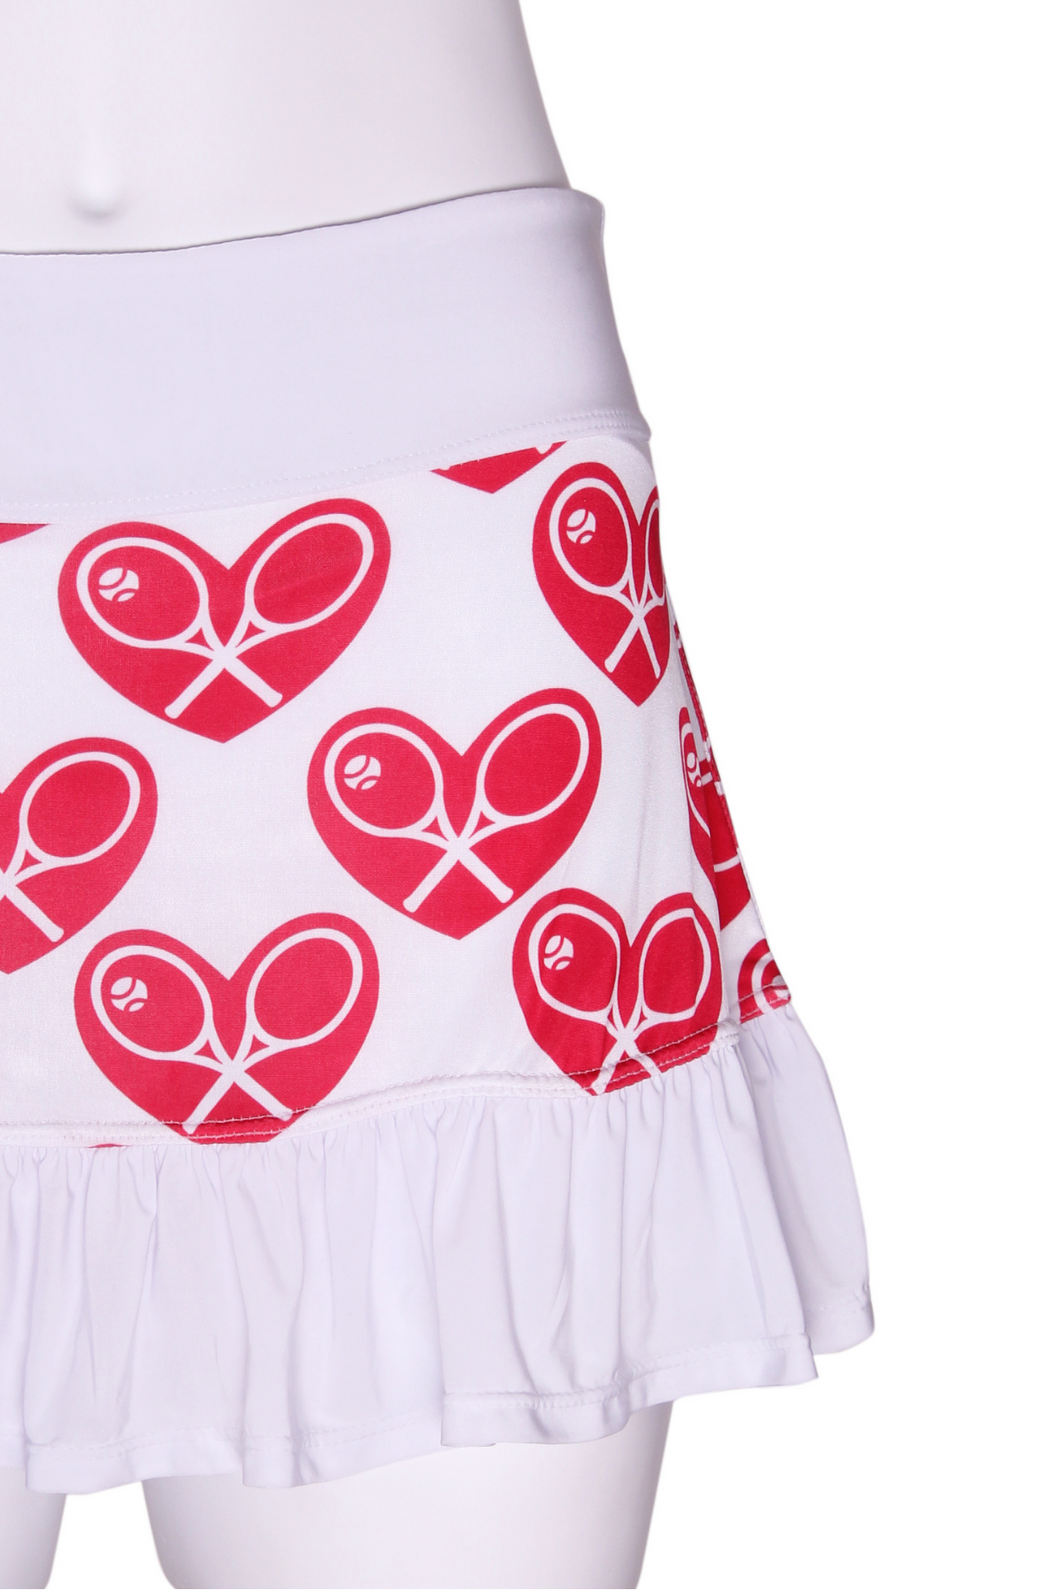 Ruffle Tennis Skirt Mid Heart on White - I LOVE MY DOUBLES PARTNER!!!